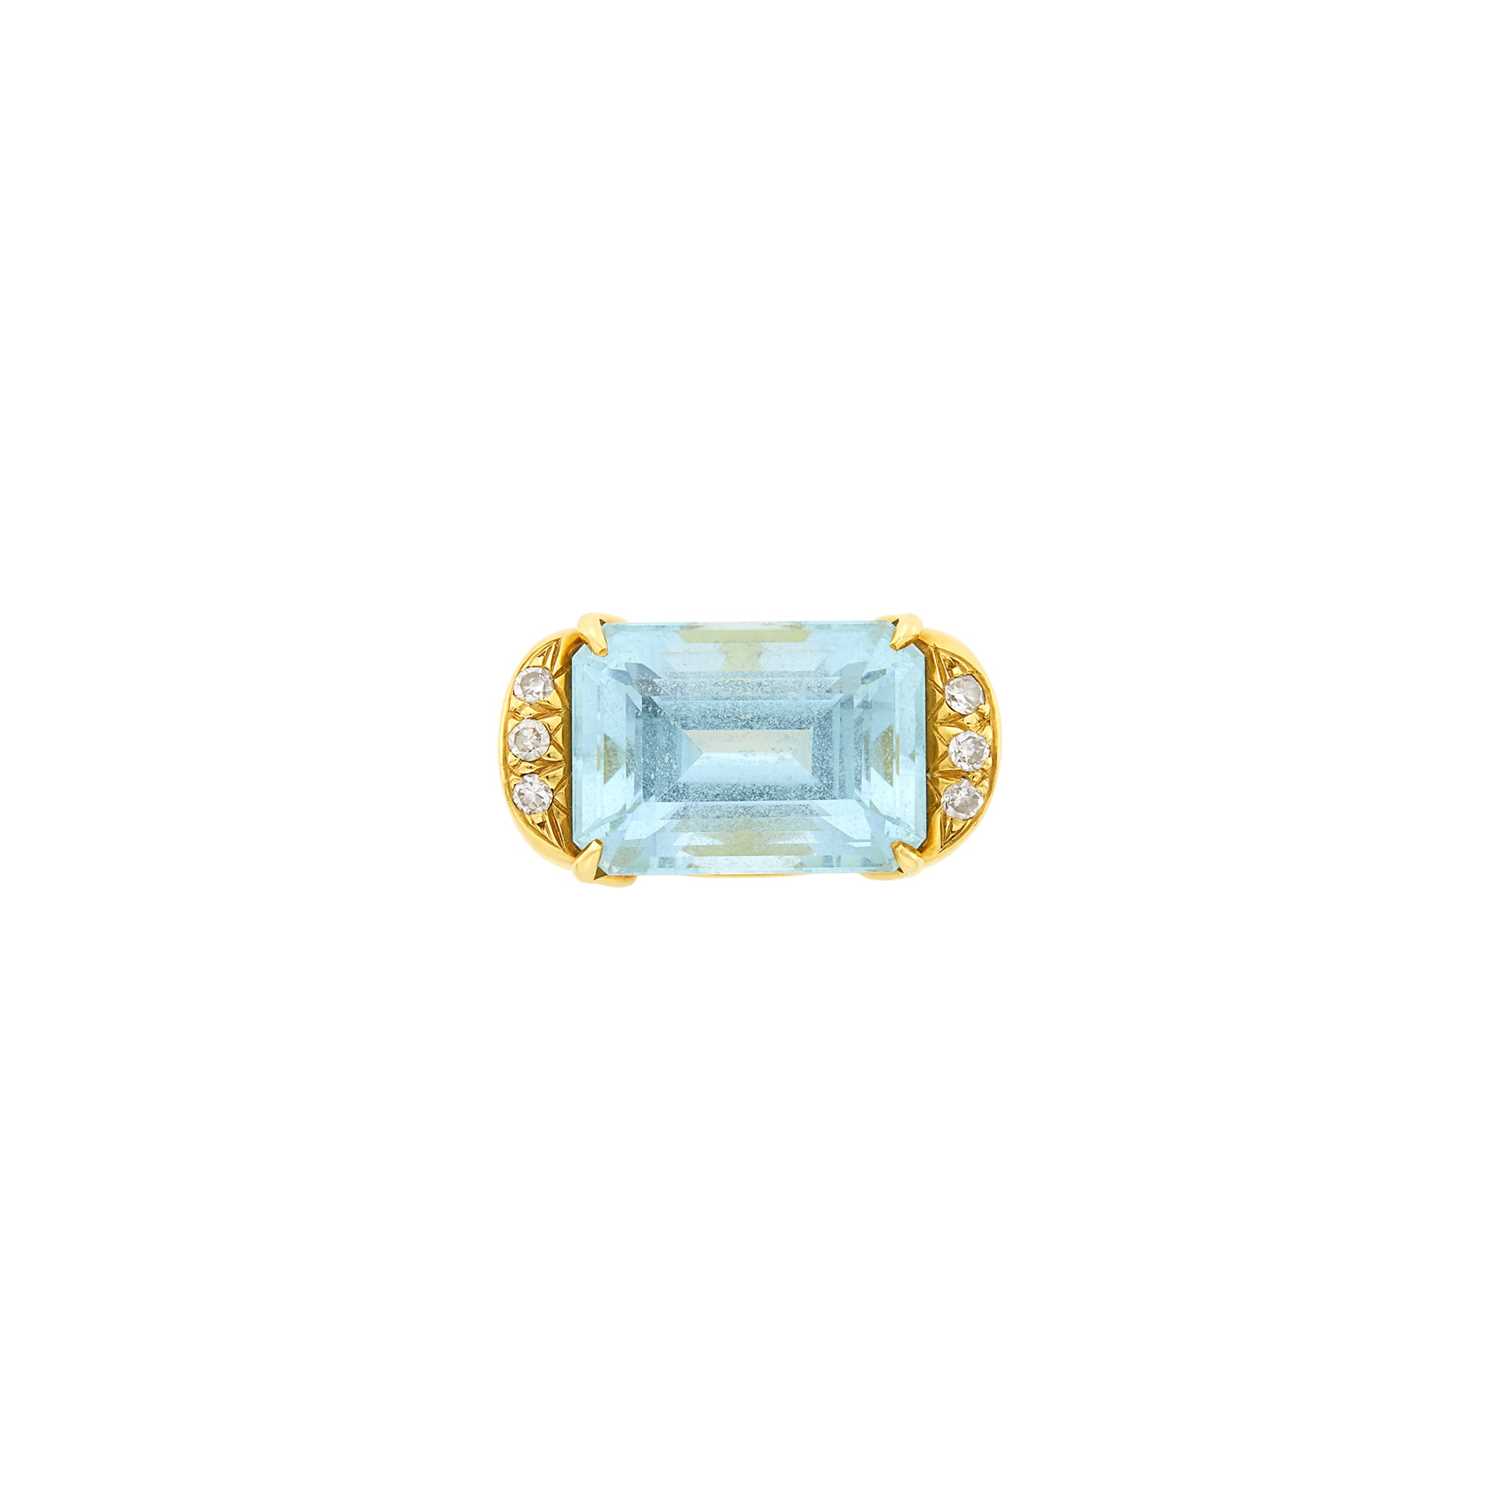 Lot 1127 - Andrew Clunn Gold, Aquamarine and Diamond Ring